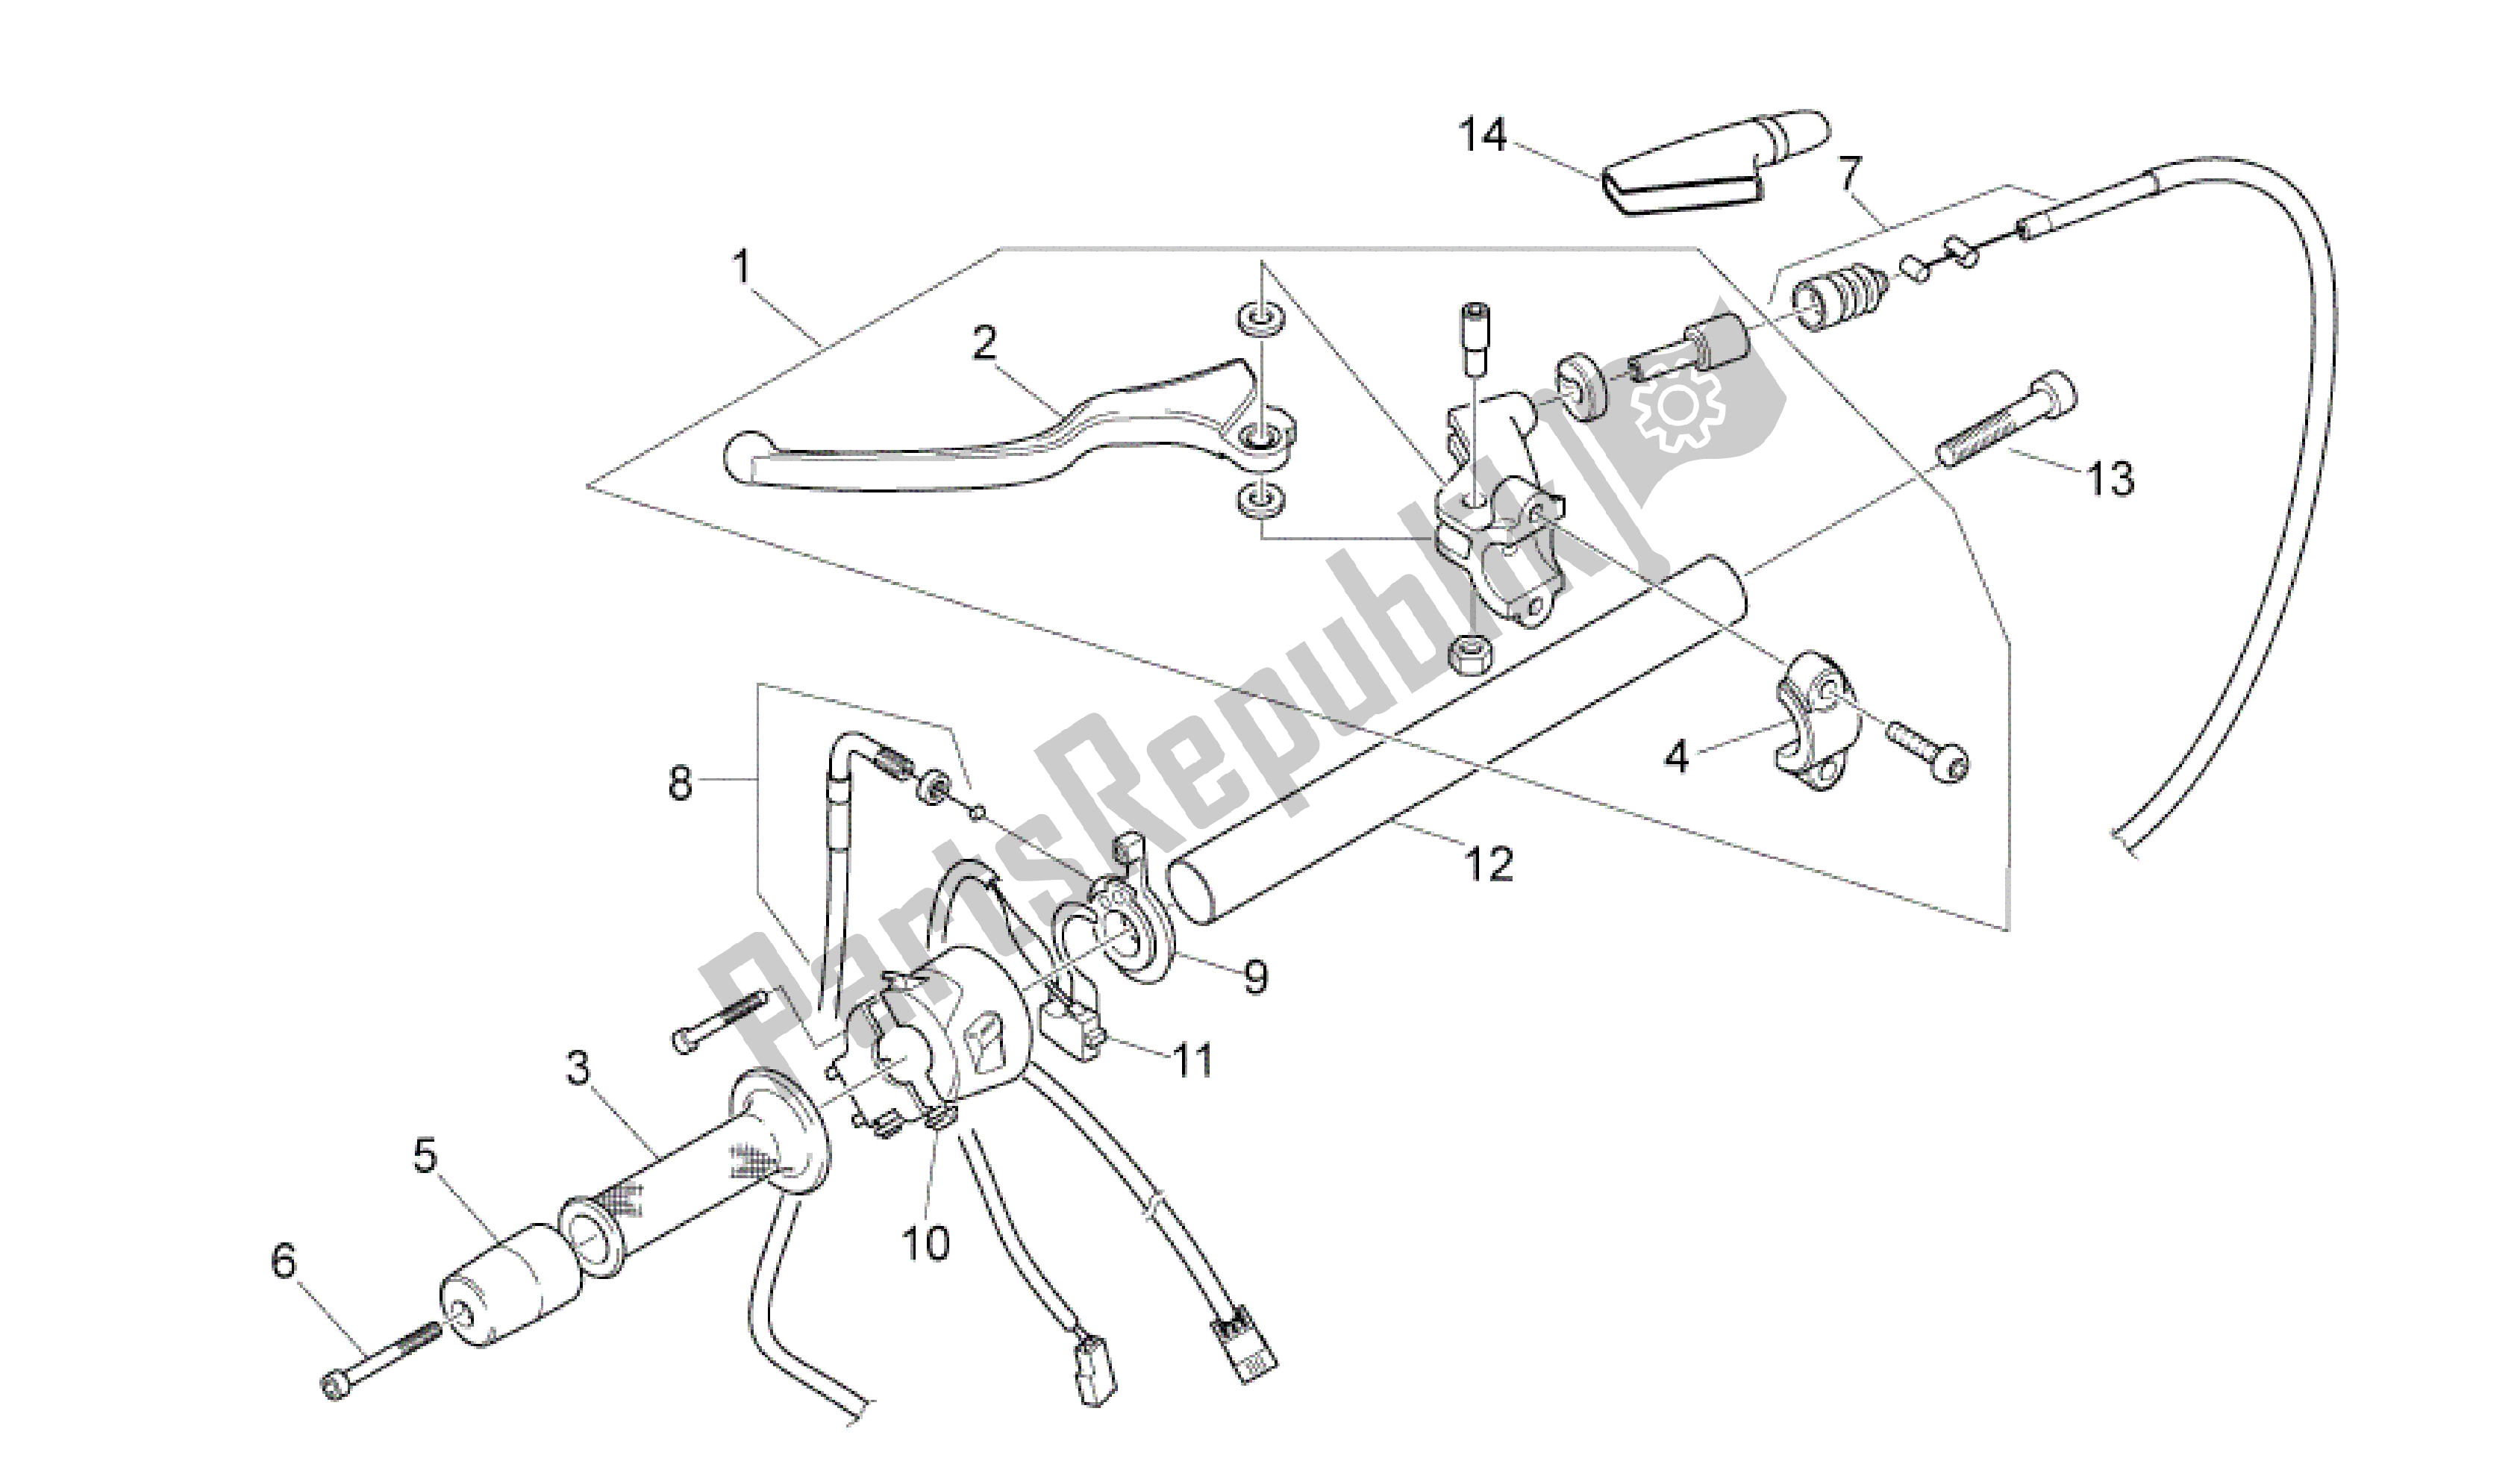 All parts for the Mandos Izq. Of the Aprilia RS 125 2006 - 2010